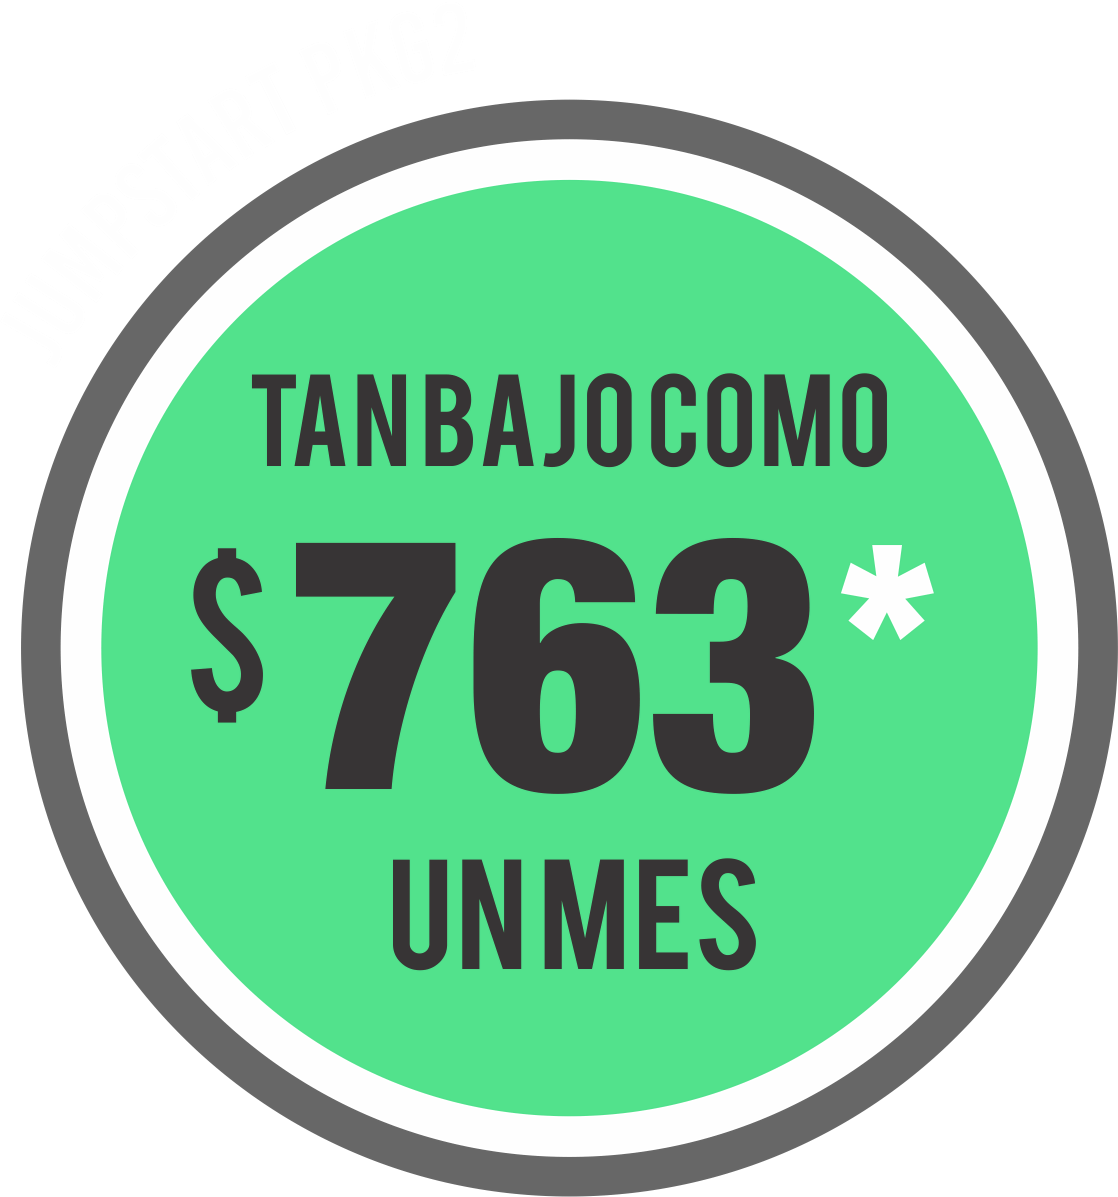 JumpStart PKG2 tanbajocomo $763 unmes